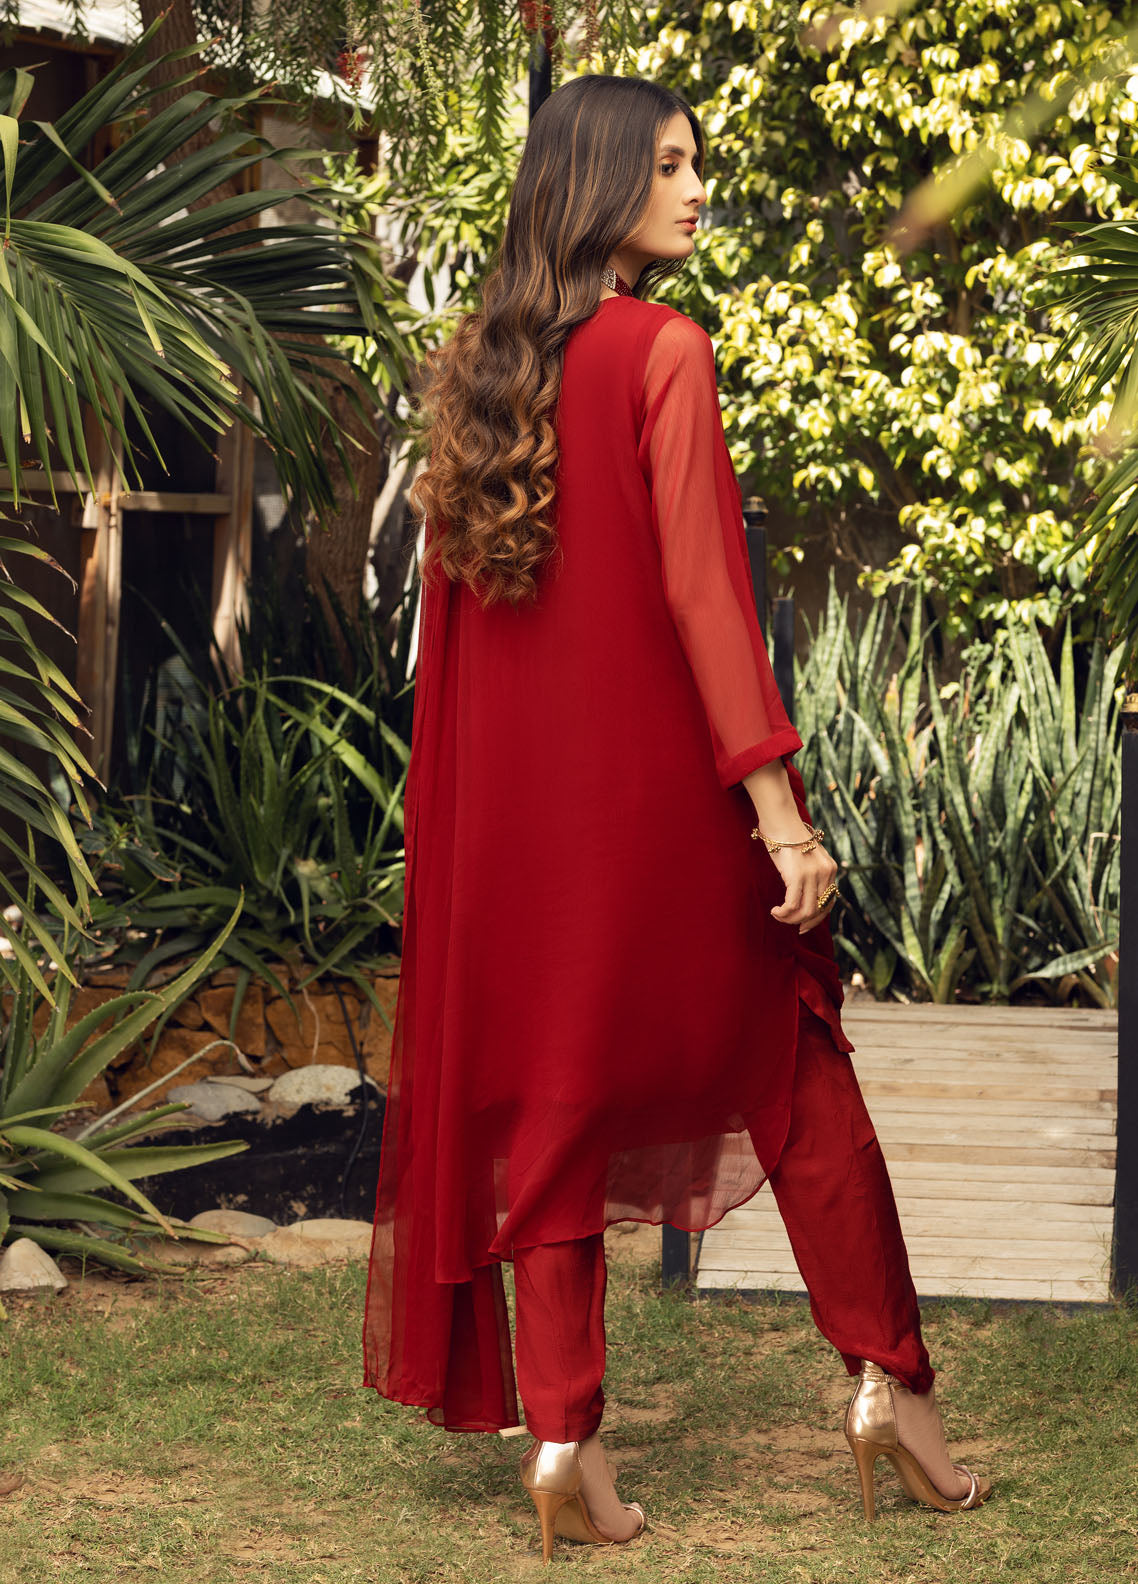 Shamooz Luxury Pret Chiffon 3 Piece Dress SEM-0406 Red Rose